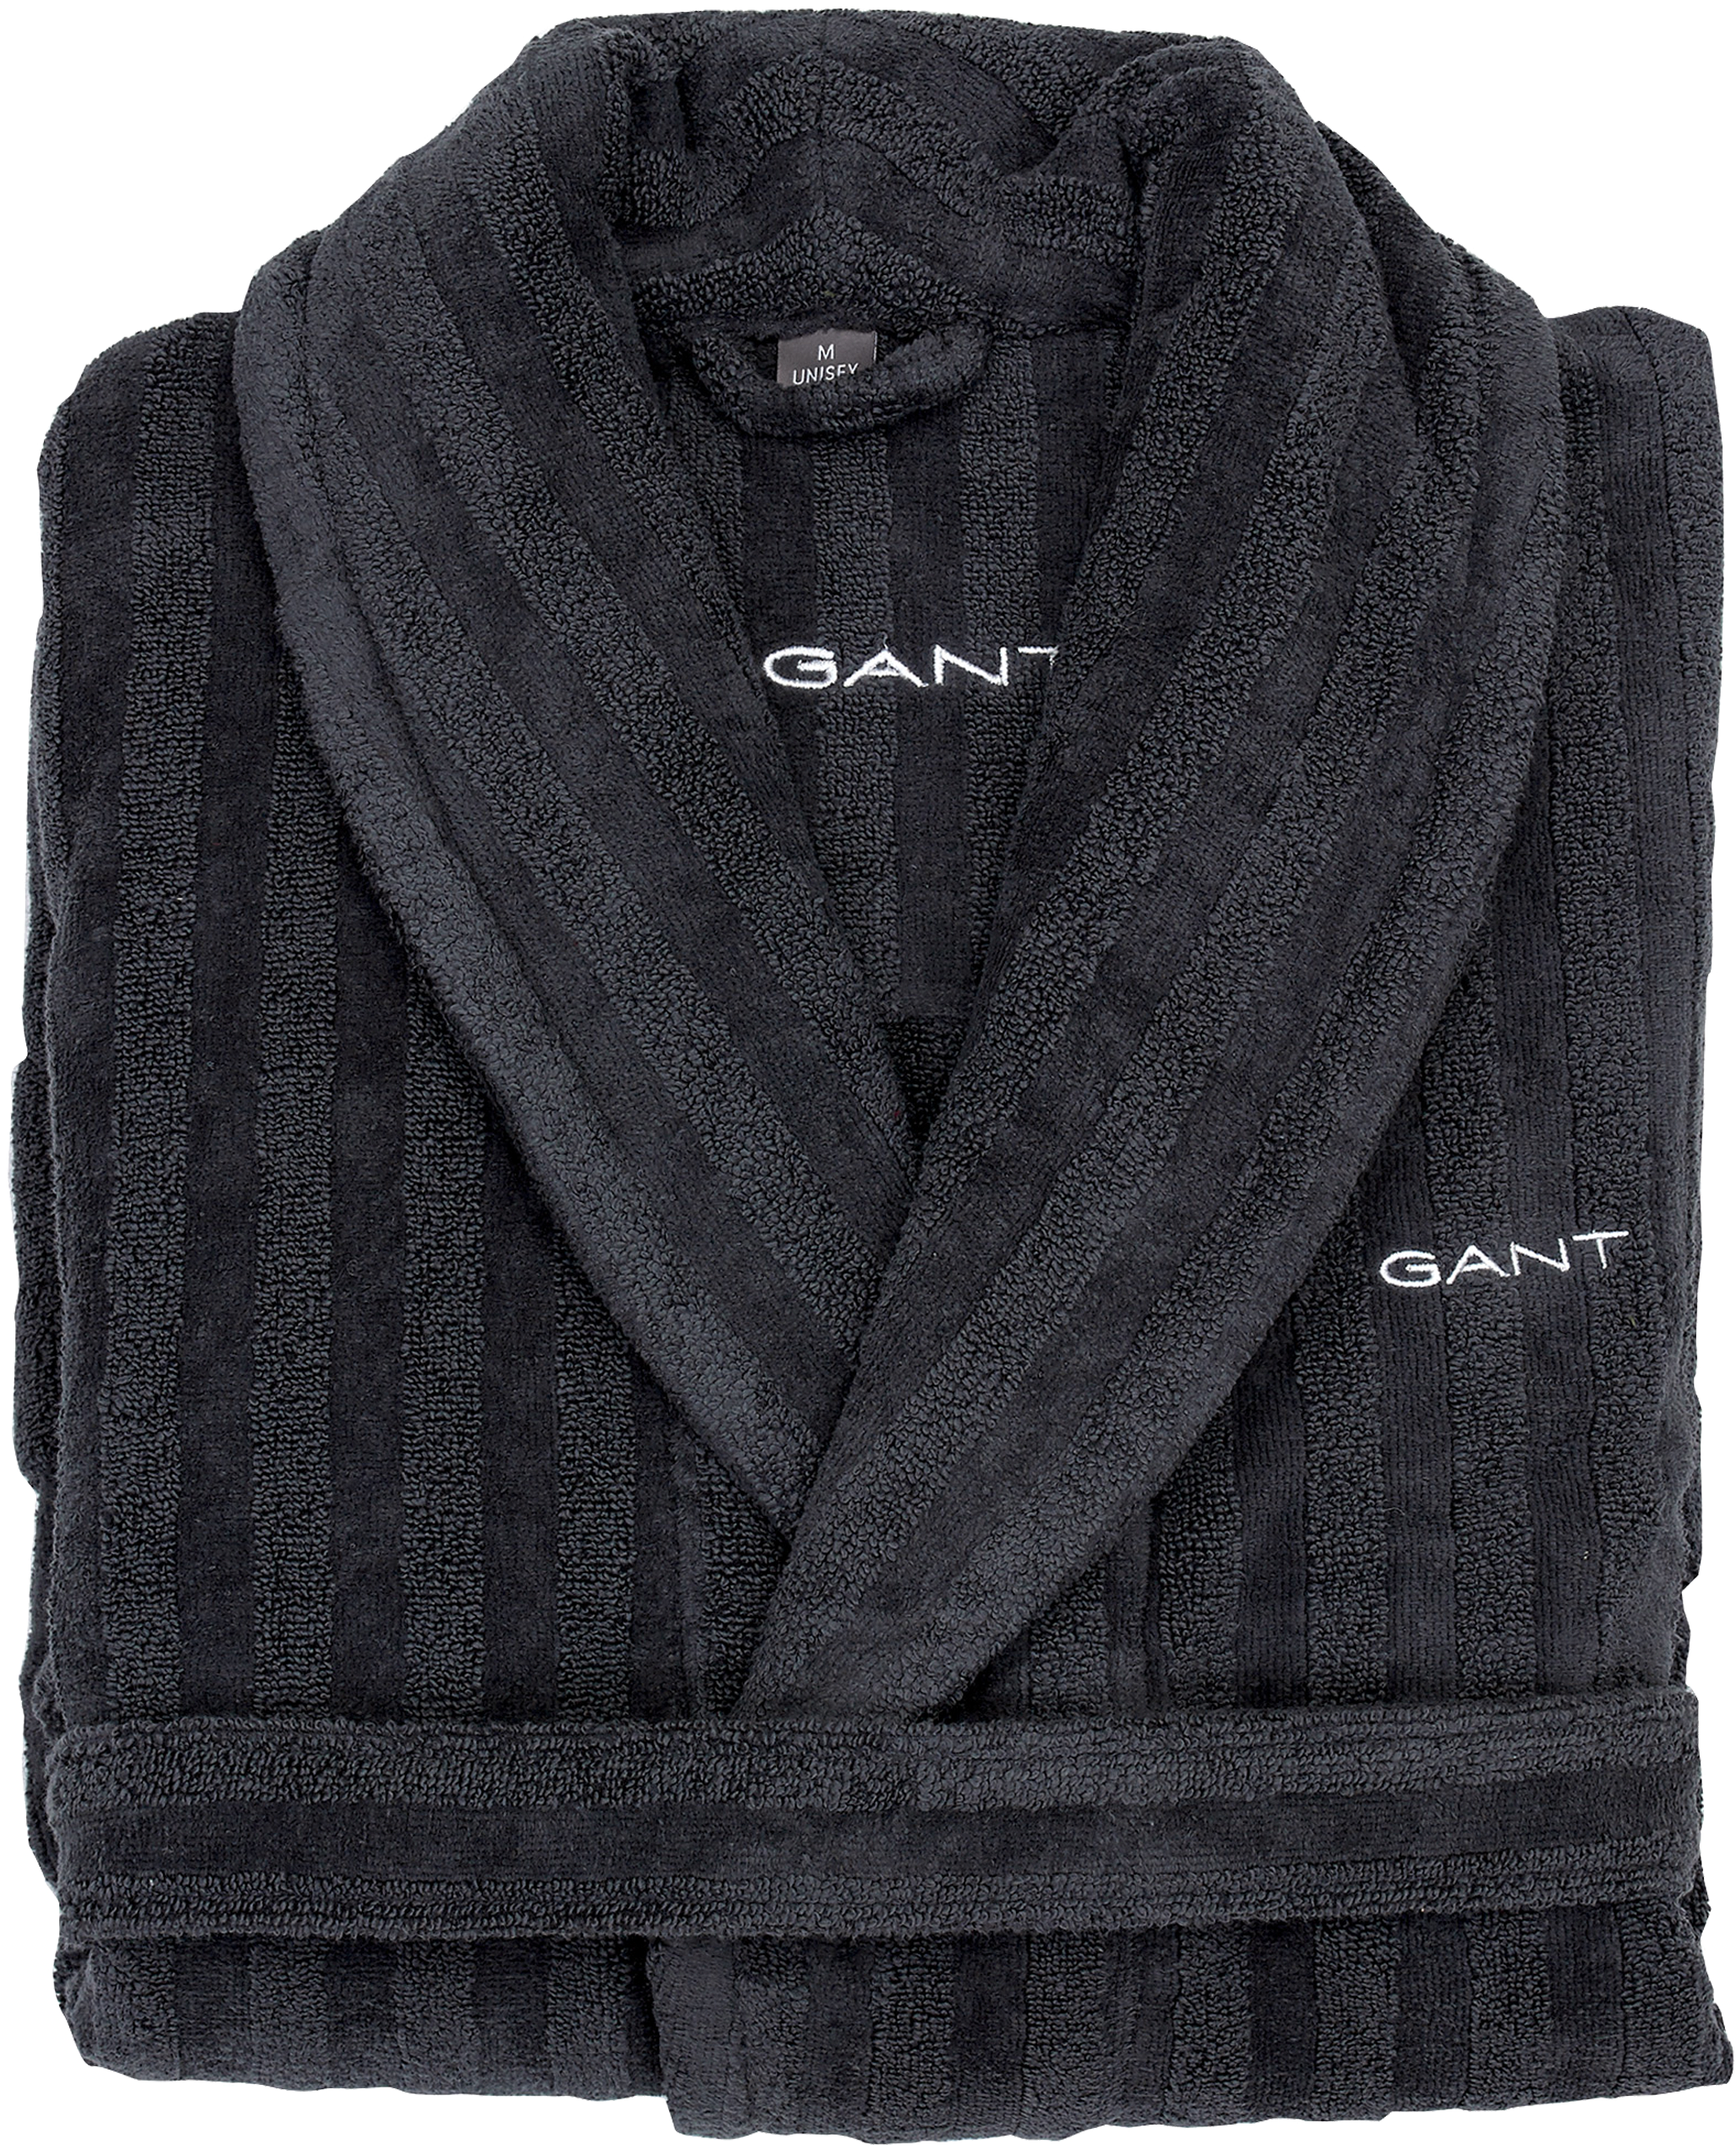 Gant Home Line Robe Grey - Gant Line Bathrobe (2560x2560), Png Download